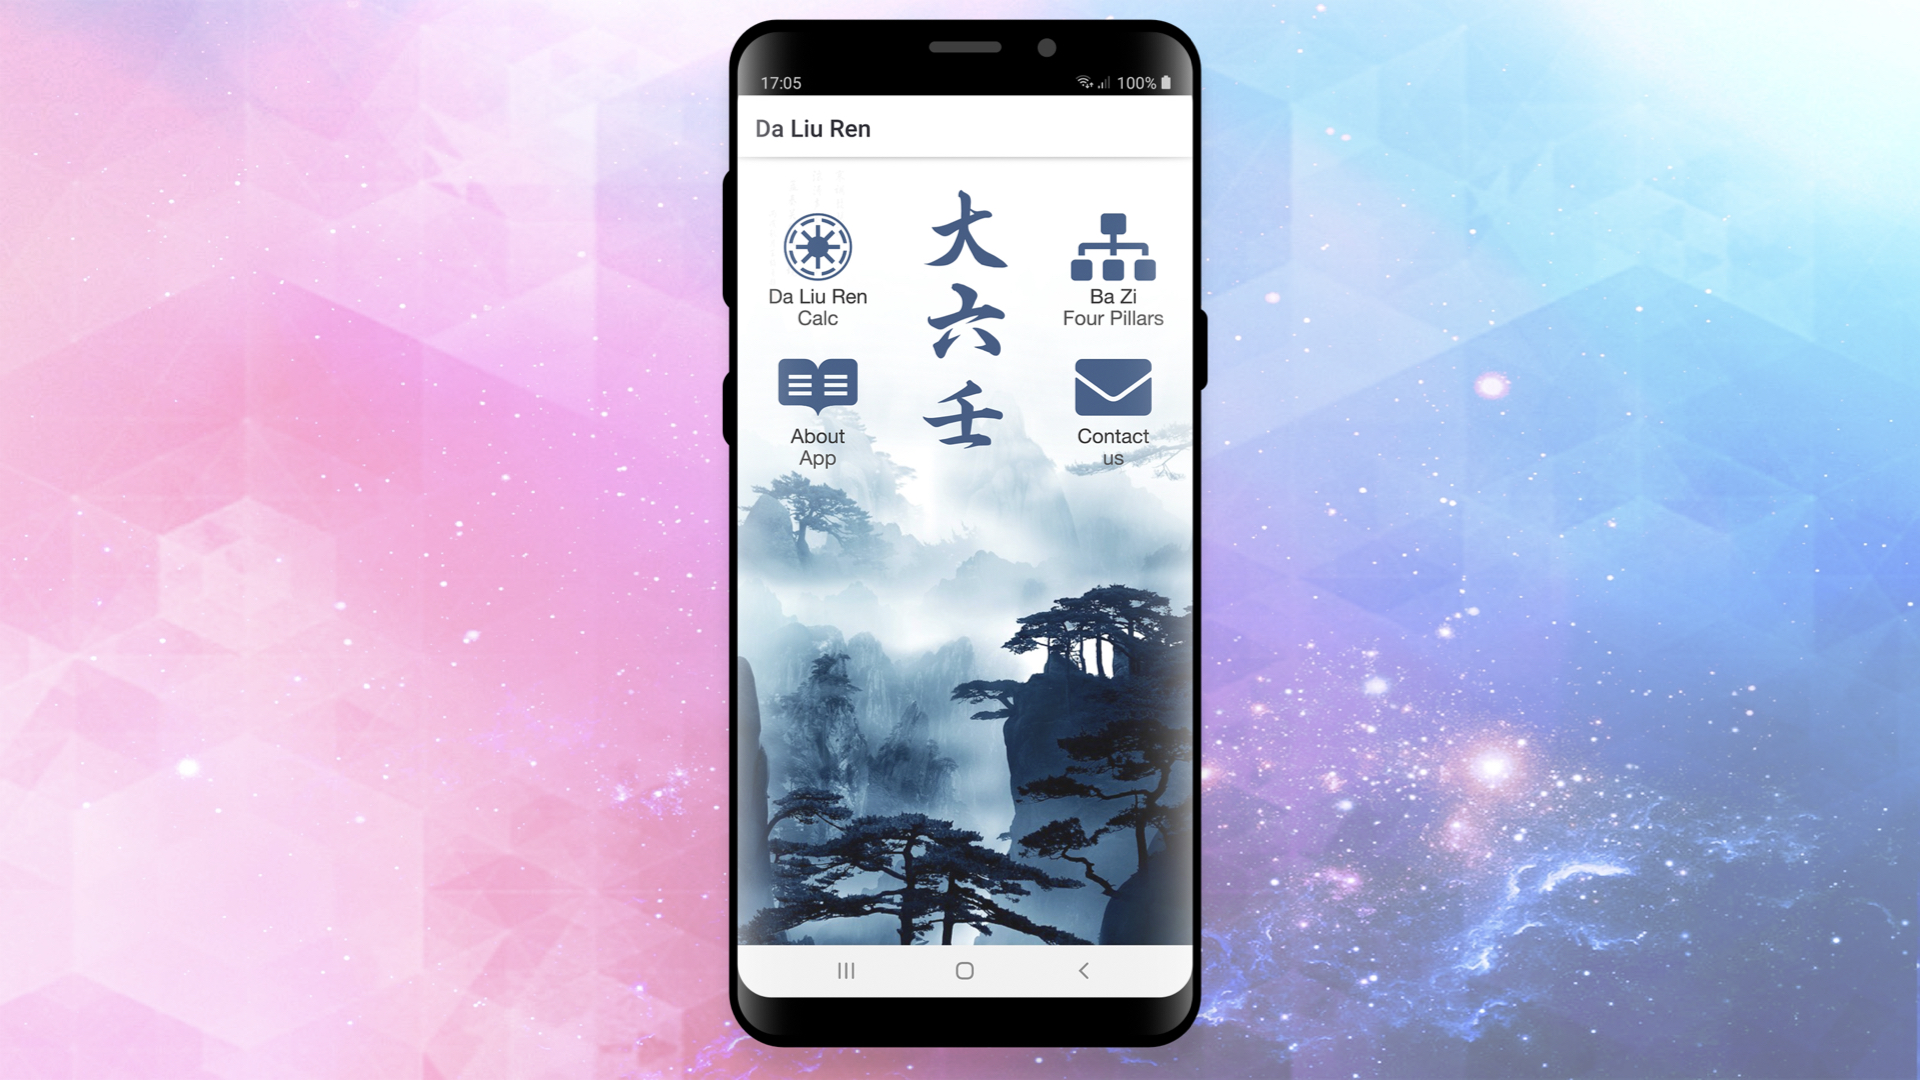 Da Liu Ren Divination App for Android Devices